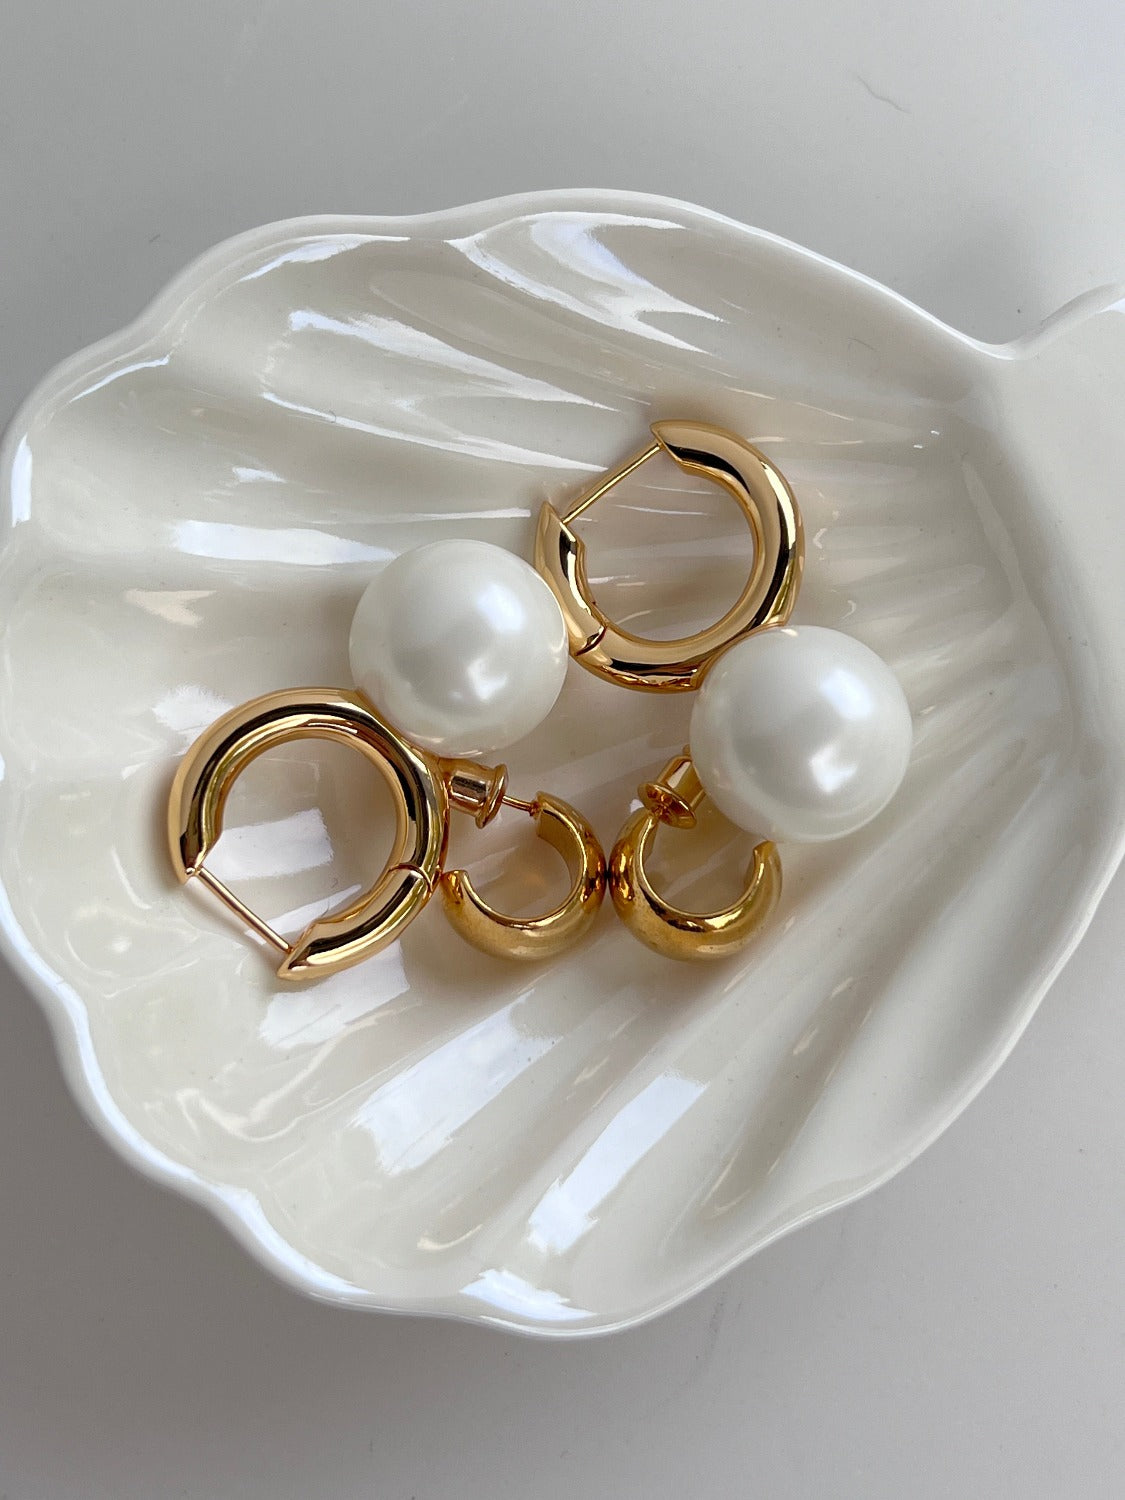 18K Gold Dangle Pearl Earrings, Chunky Pearl Vintage Drop Earrings, Gold Hoop Earrings, Statement Pearl Earrings, Handmade Pearl Earrings